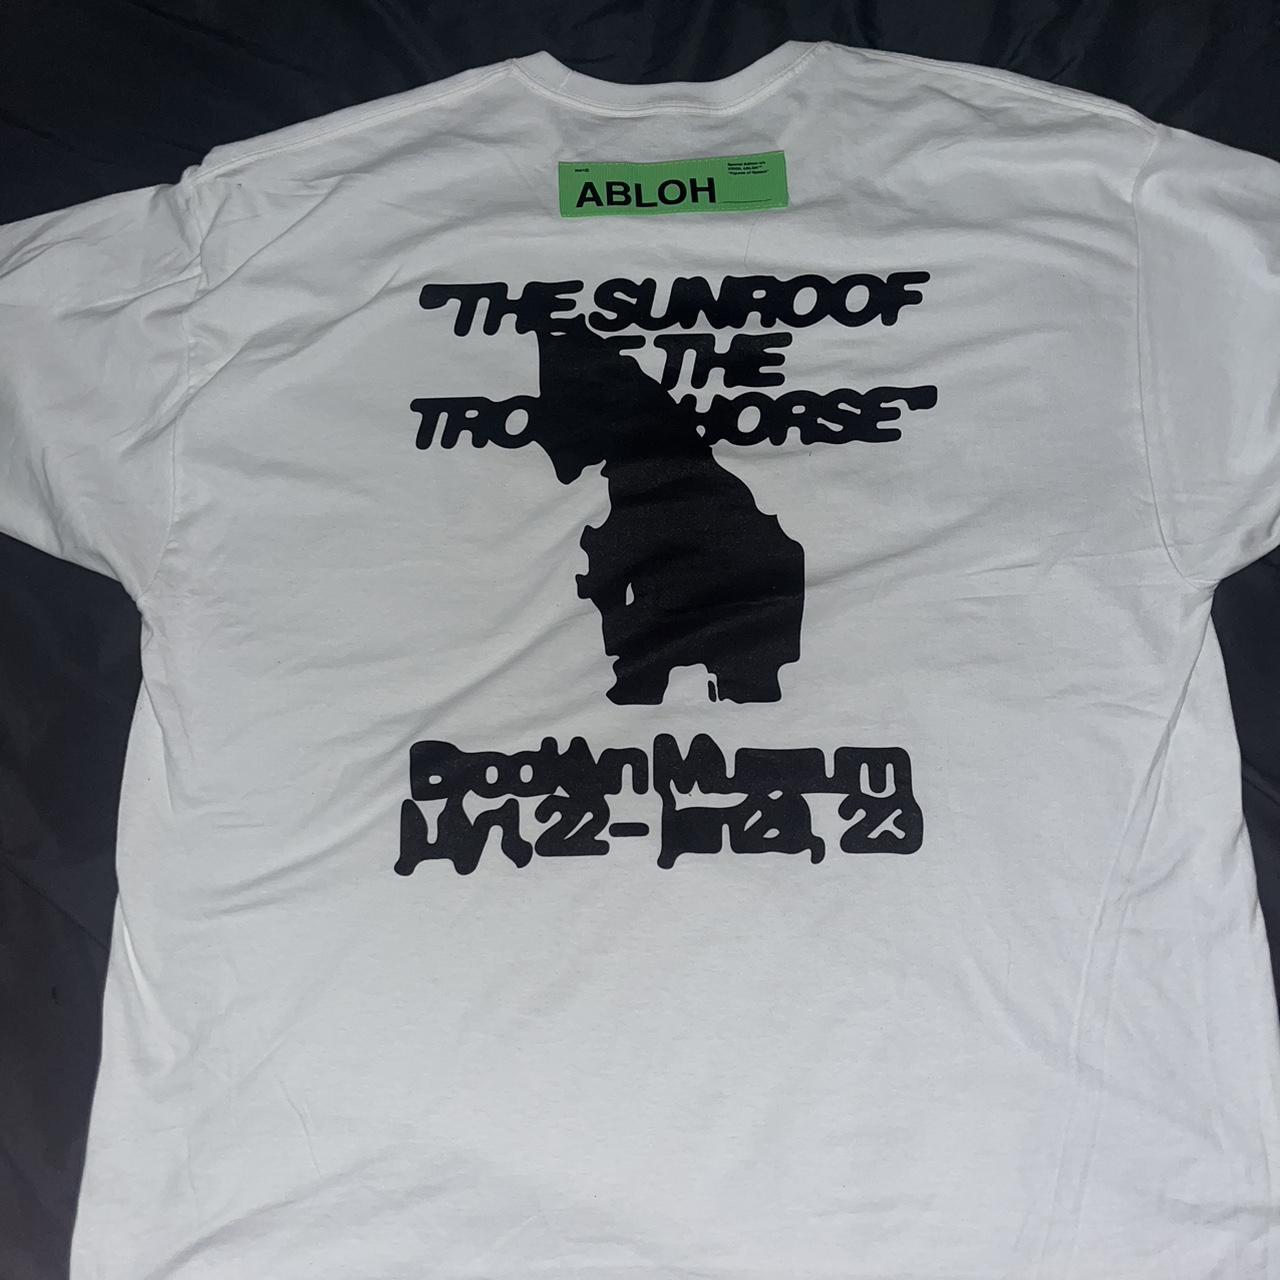 Virgil Abloh Brooklyn Museum FOS Champion T-shirt for $19.99 :  r/frugalmalefashion